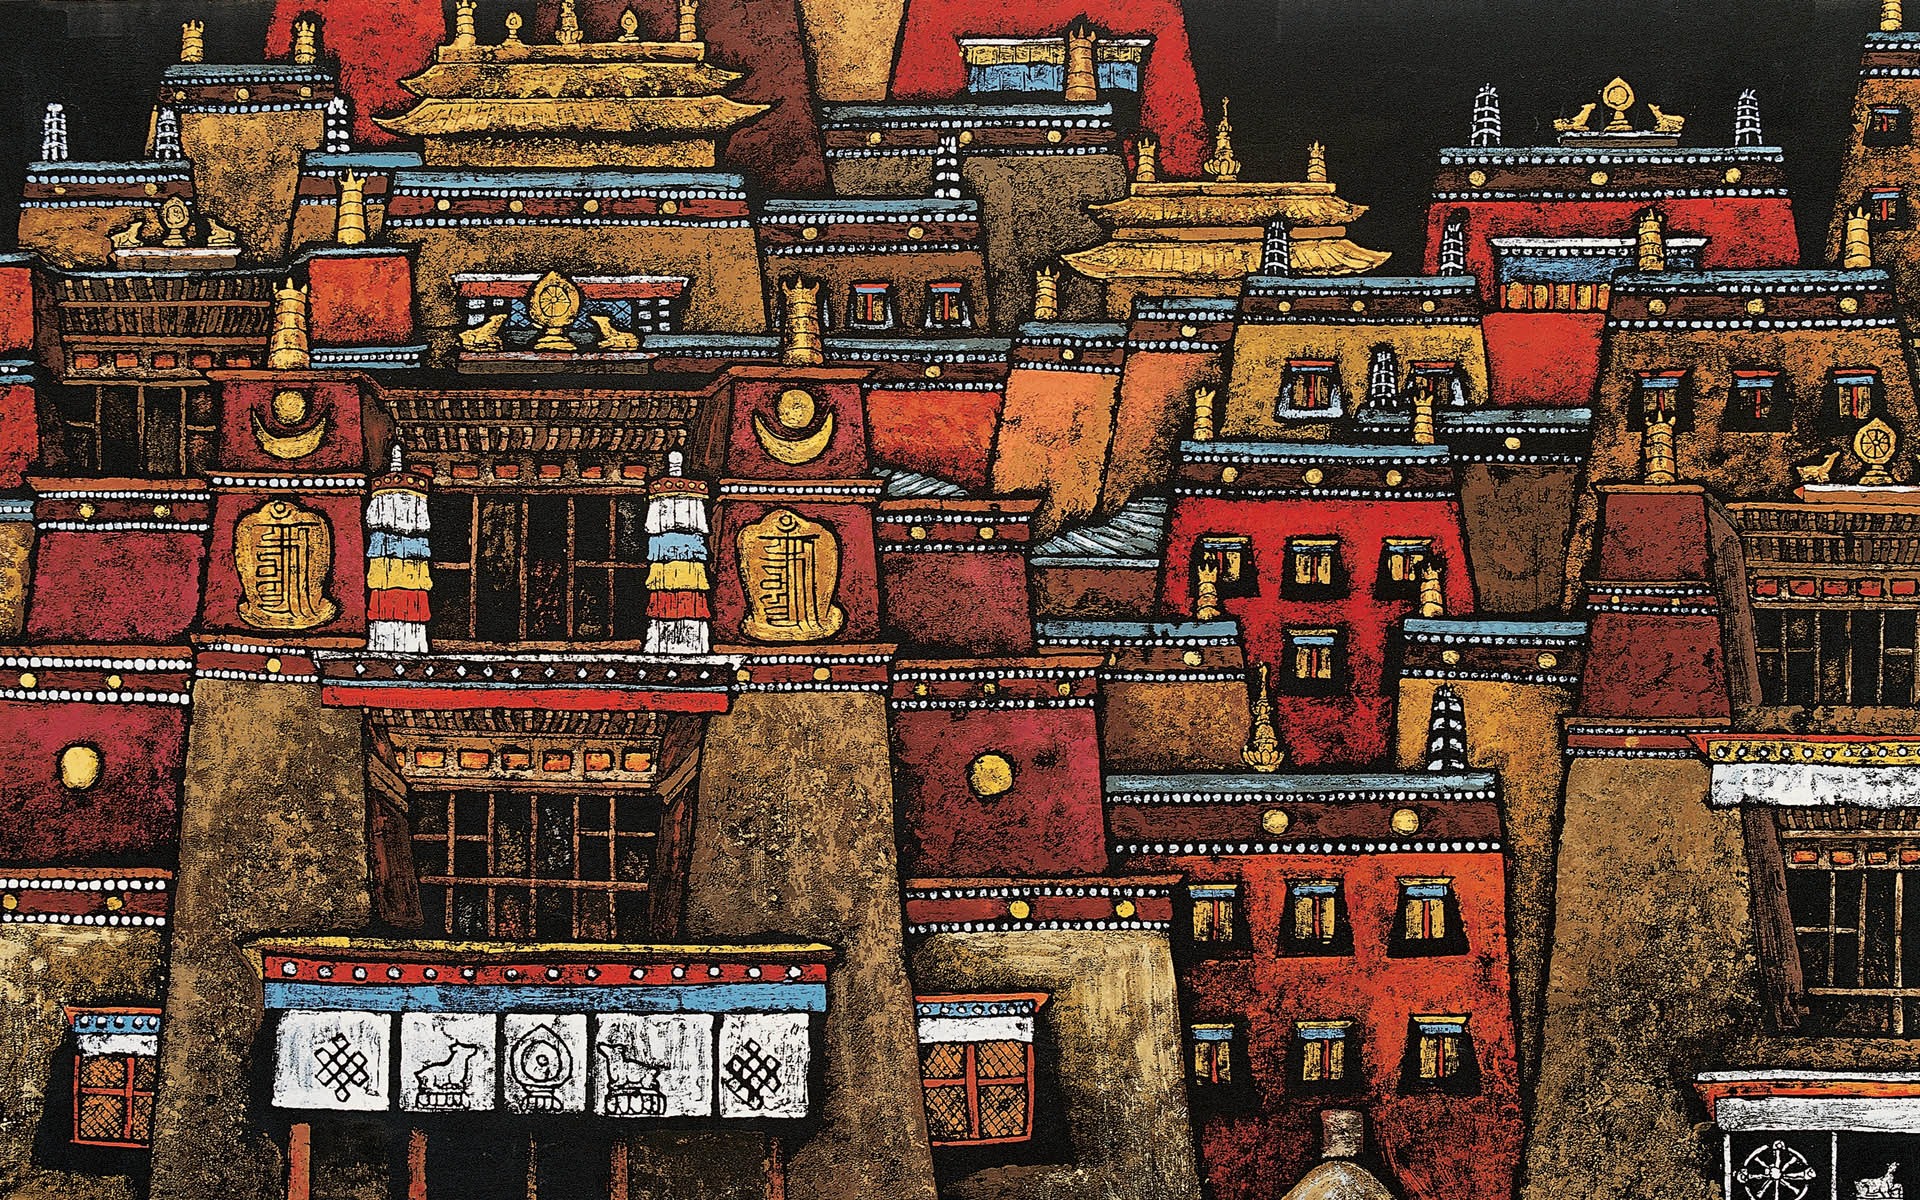 Cheung Pakistan fond d'écran d'impression du Tibet (1) #18 - 1920x1200